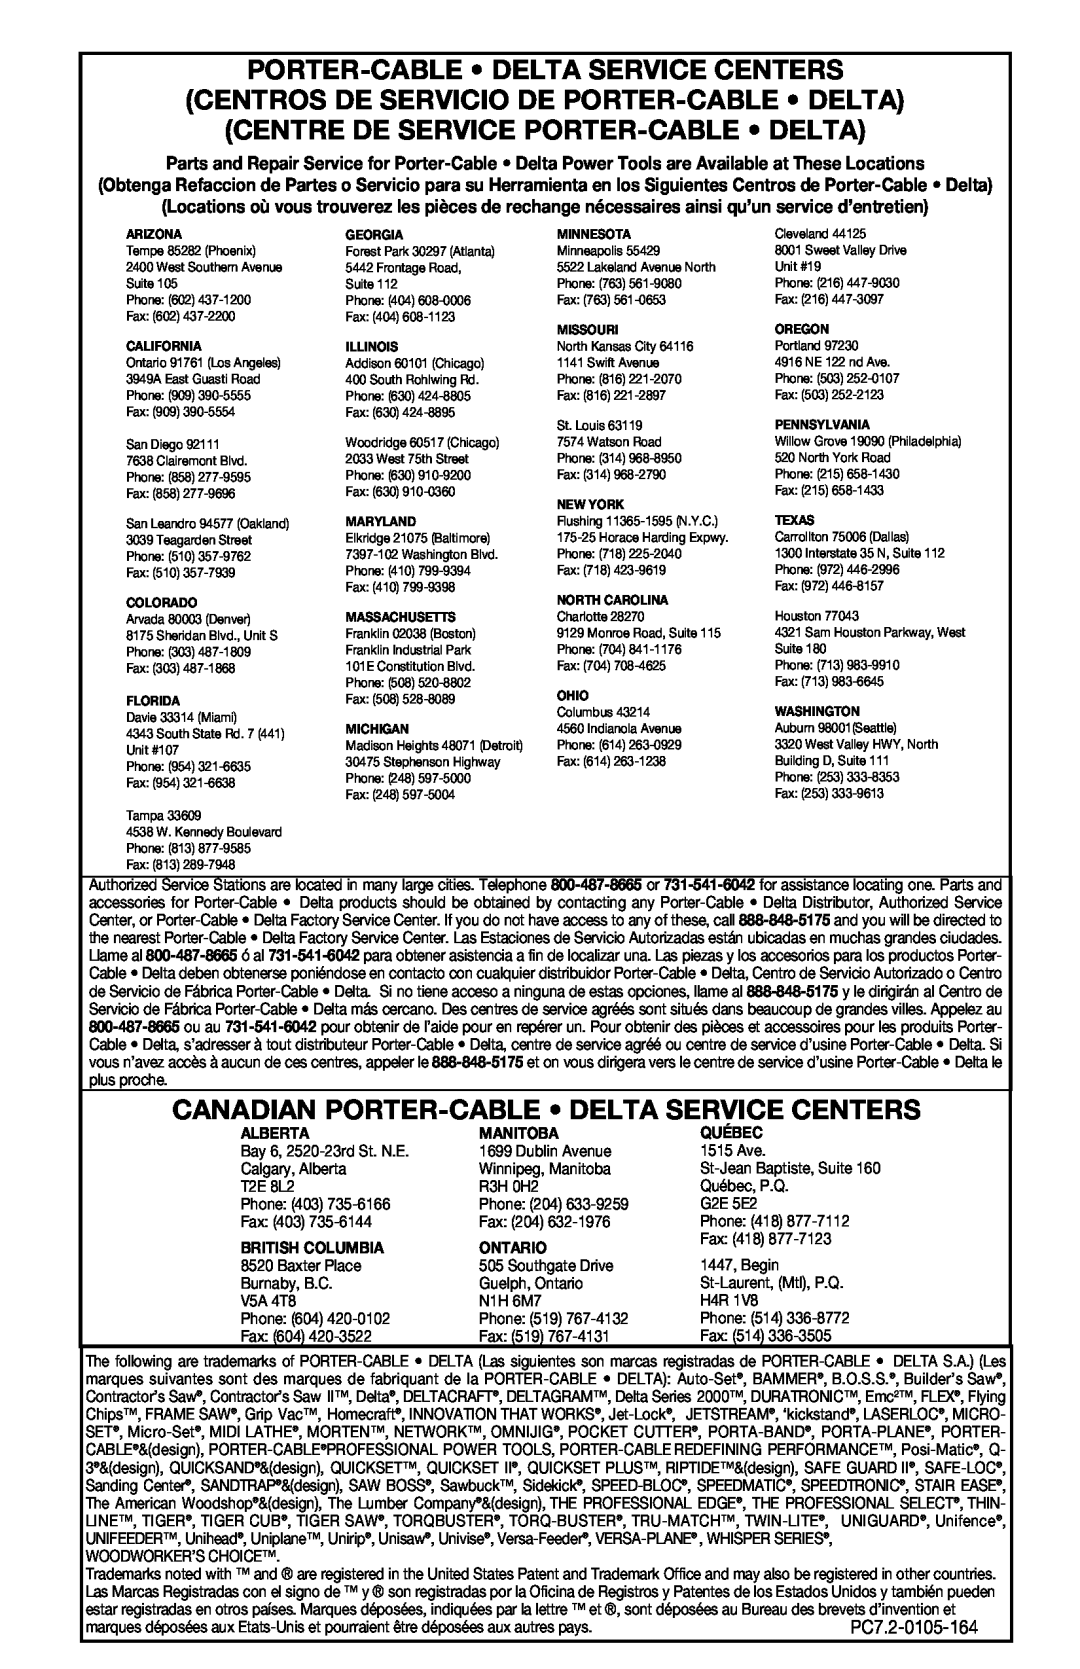 Porter-Cable 6603 Porter-Cable Delta Service Centers, Centros De Servicio De Porter-Cable Delta, Alberta, Manitoba, Québec 